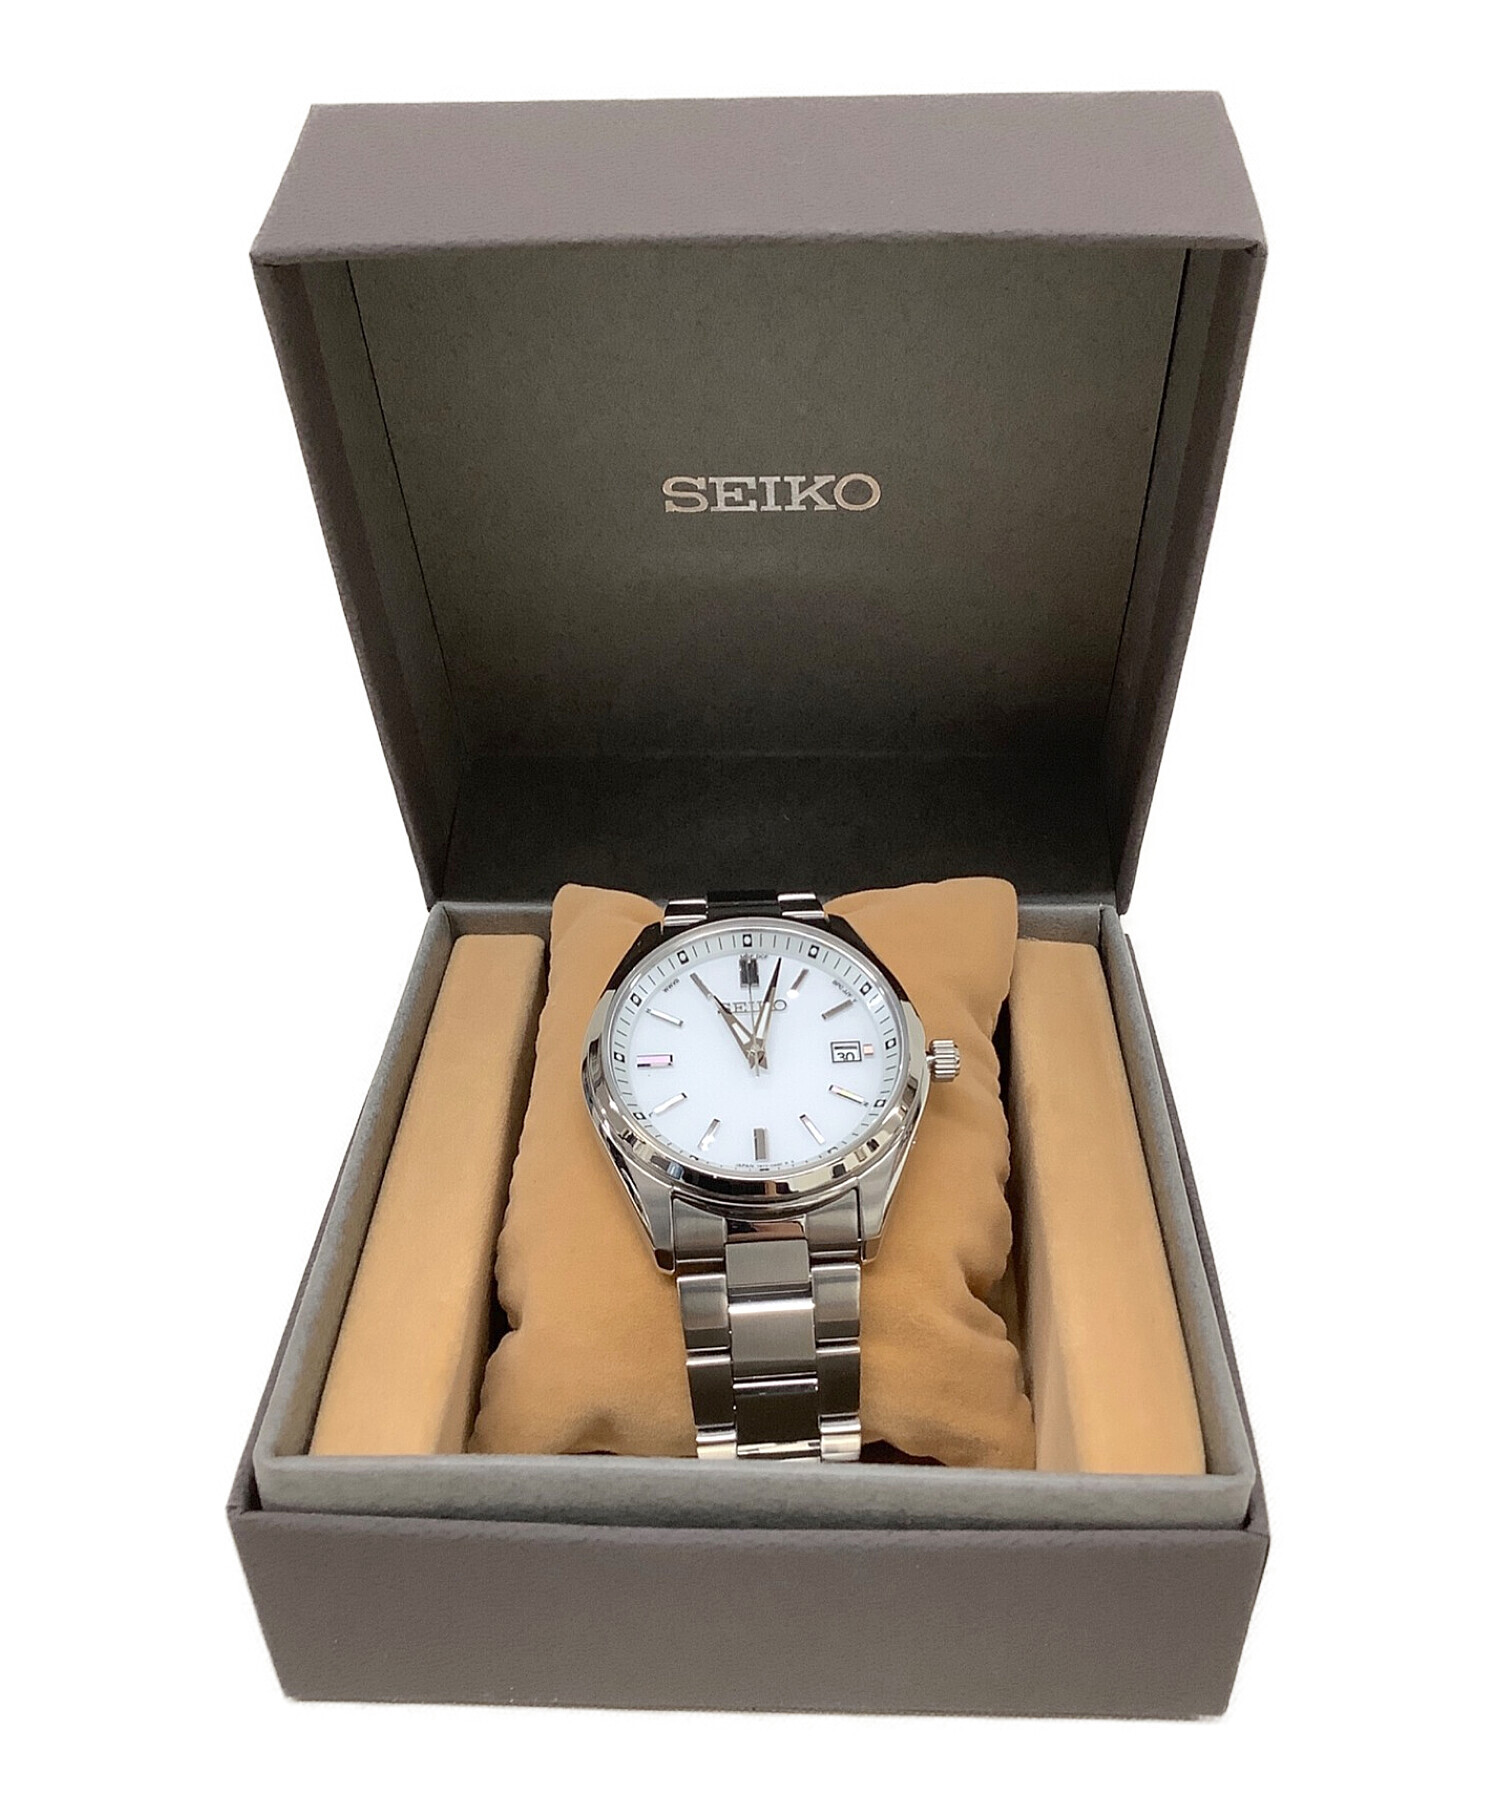 SEIKO (セイコー) アナログ腕時計